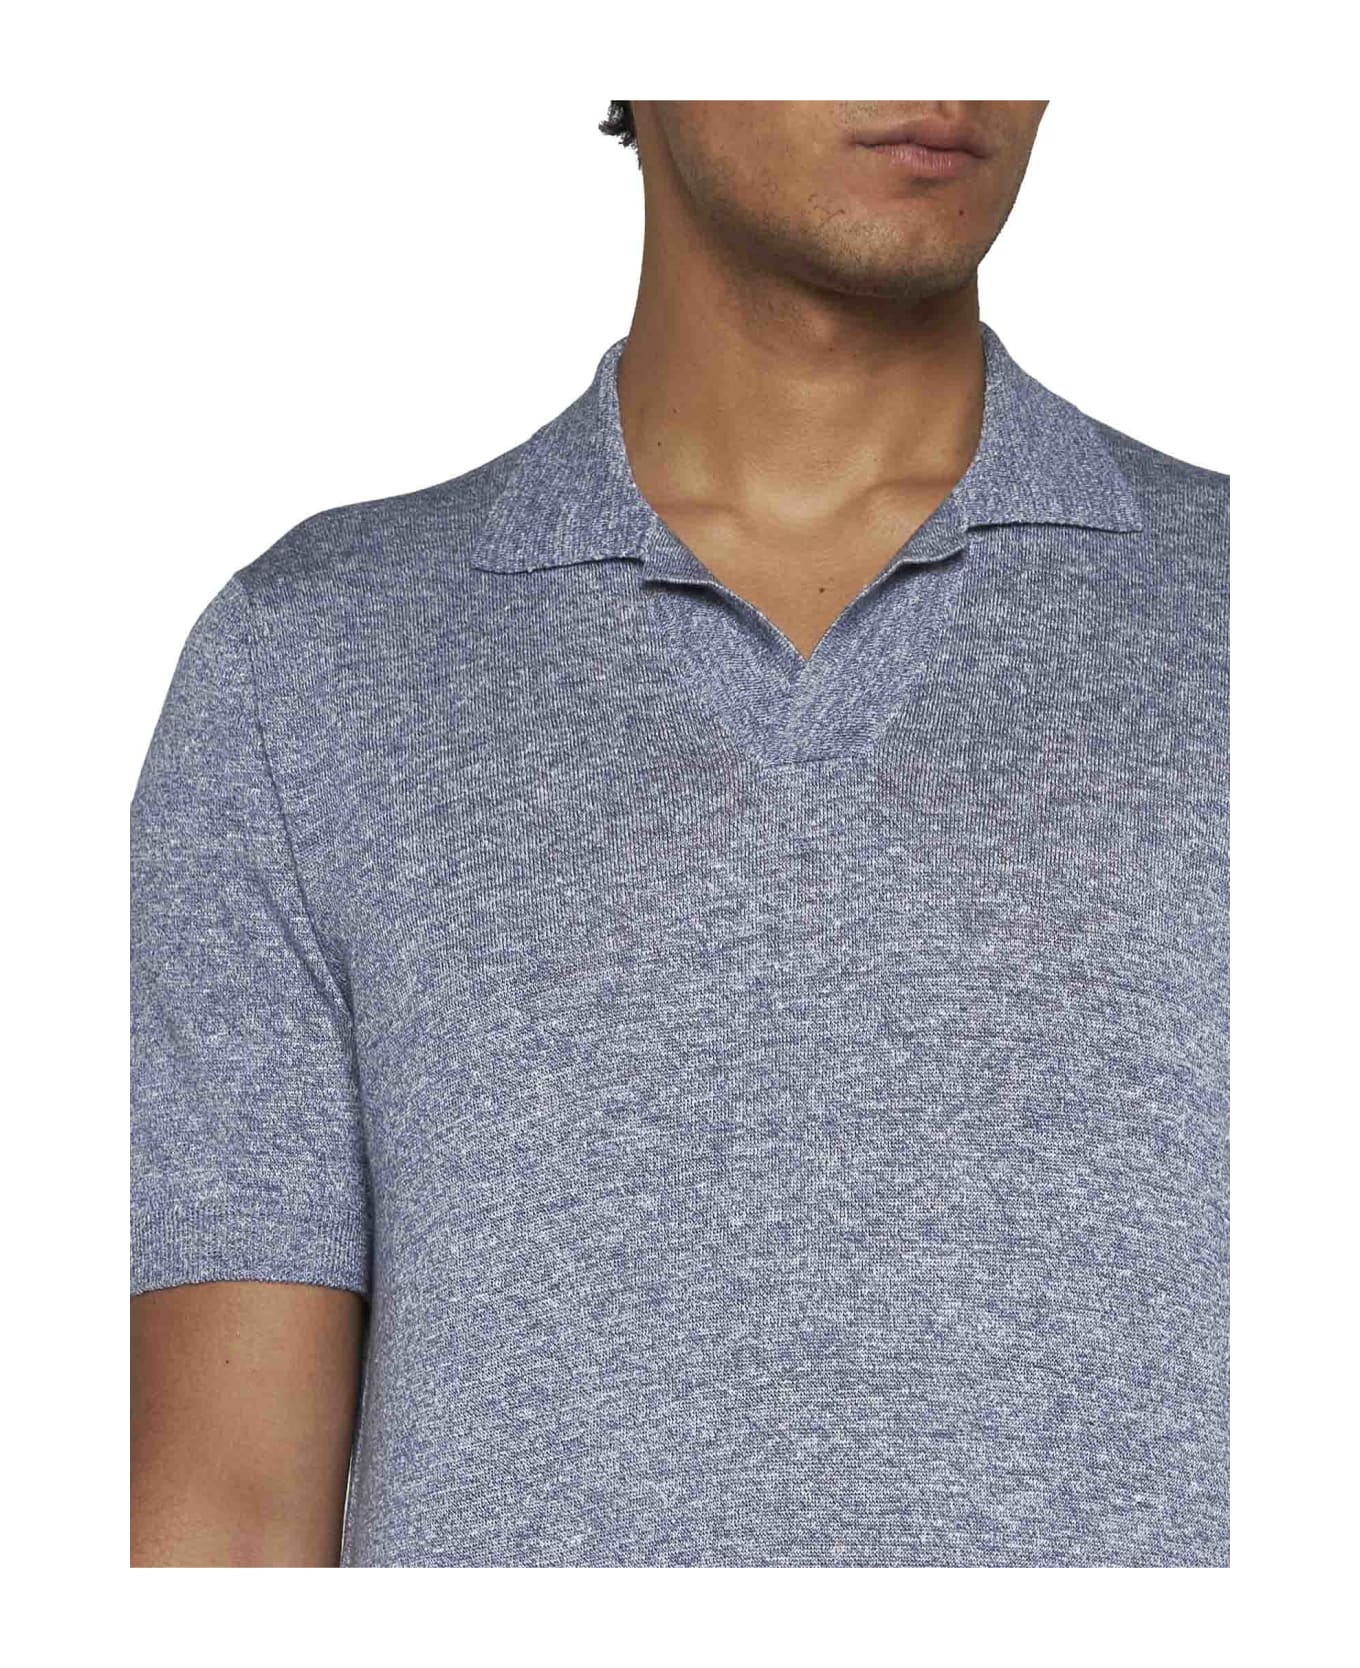 Tagliatore Polo Shirt - Indaco melange ポロシャツ